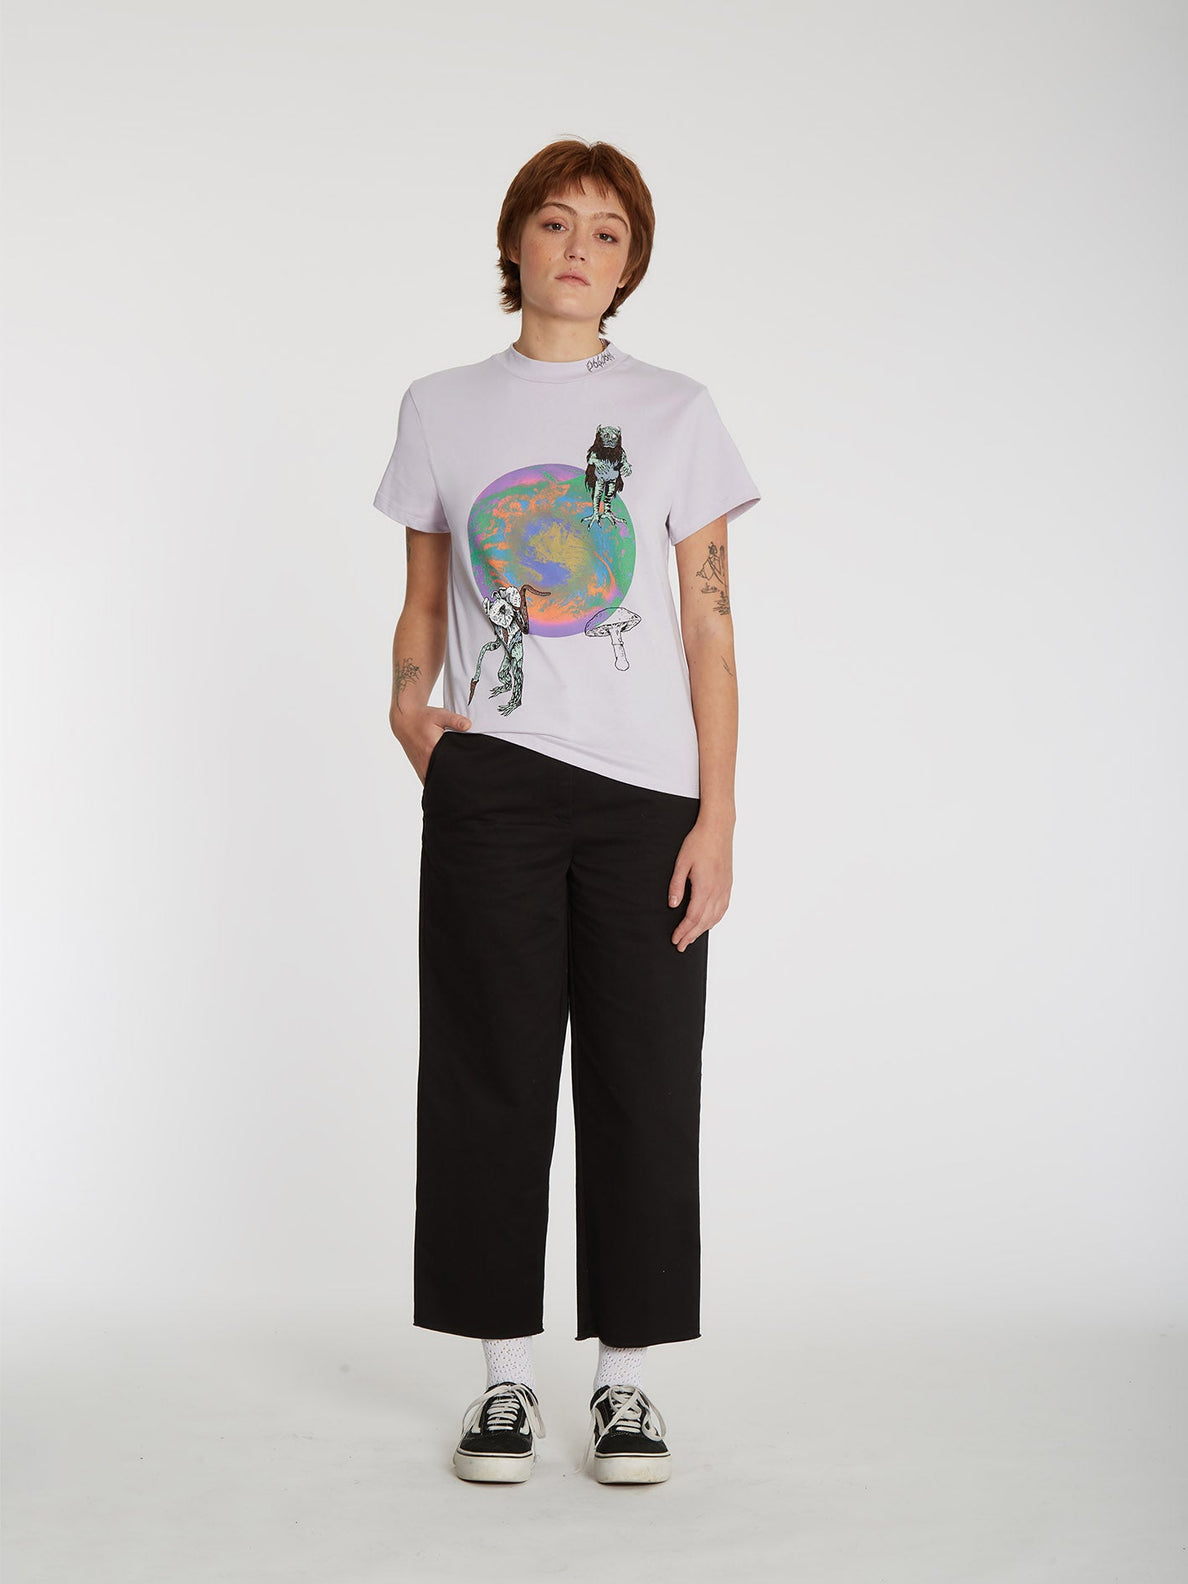 Chrissie Abbott X French T-shirt - LAVENDER (B3532208_LAV) [10]